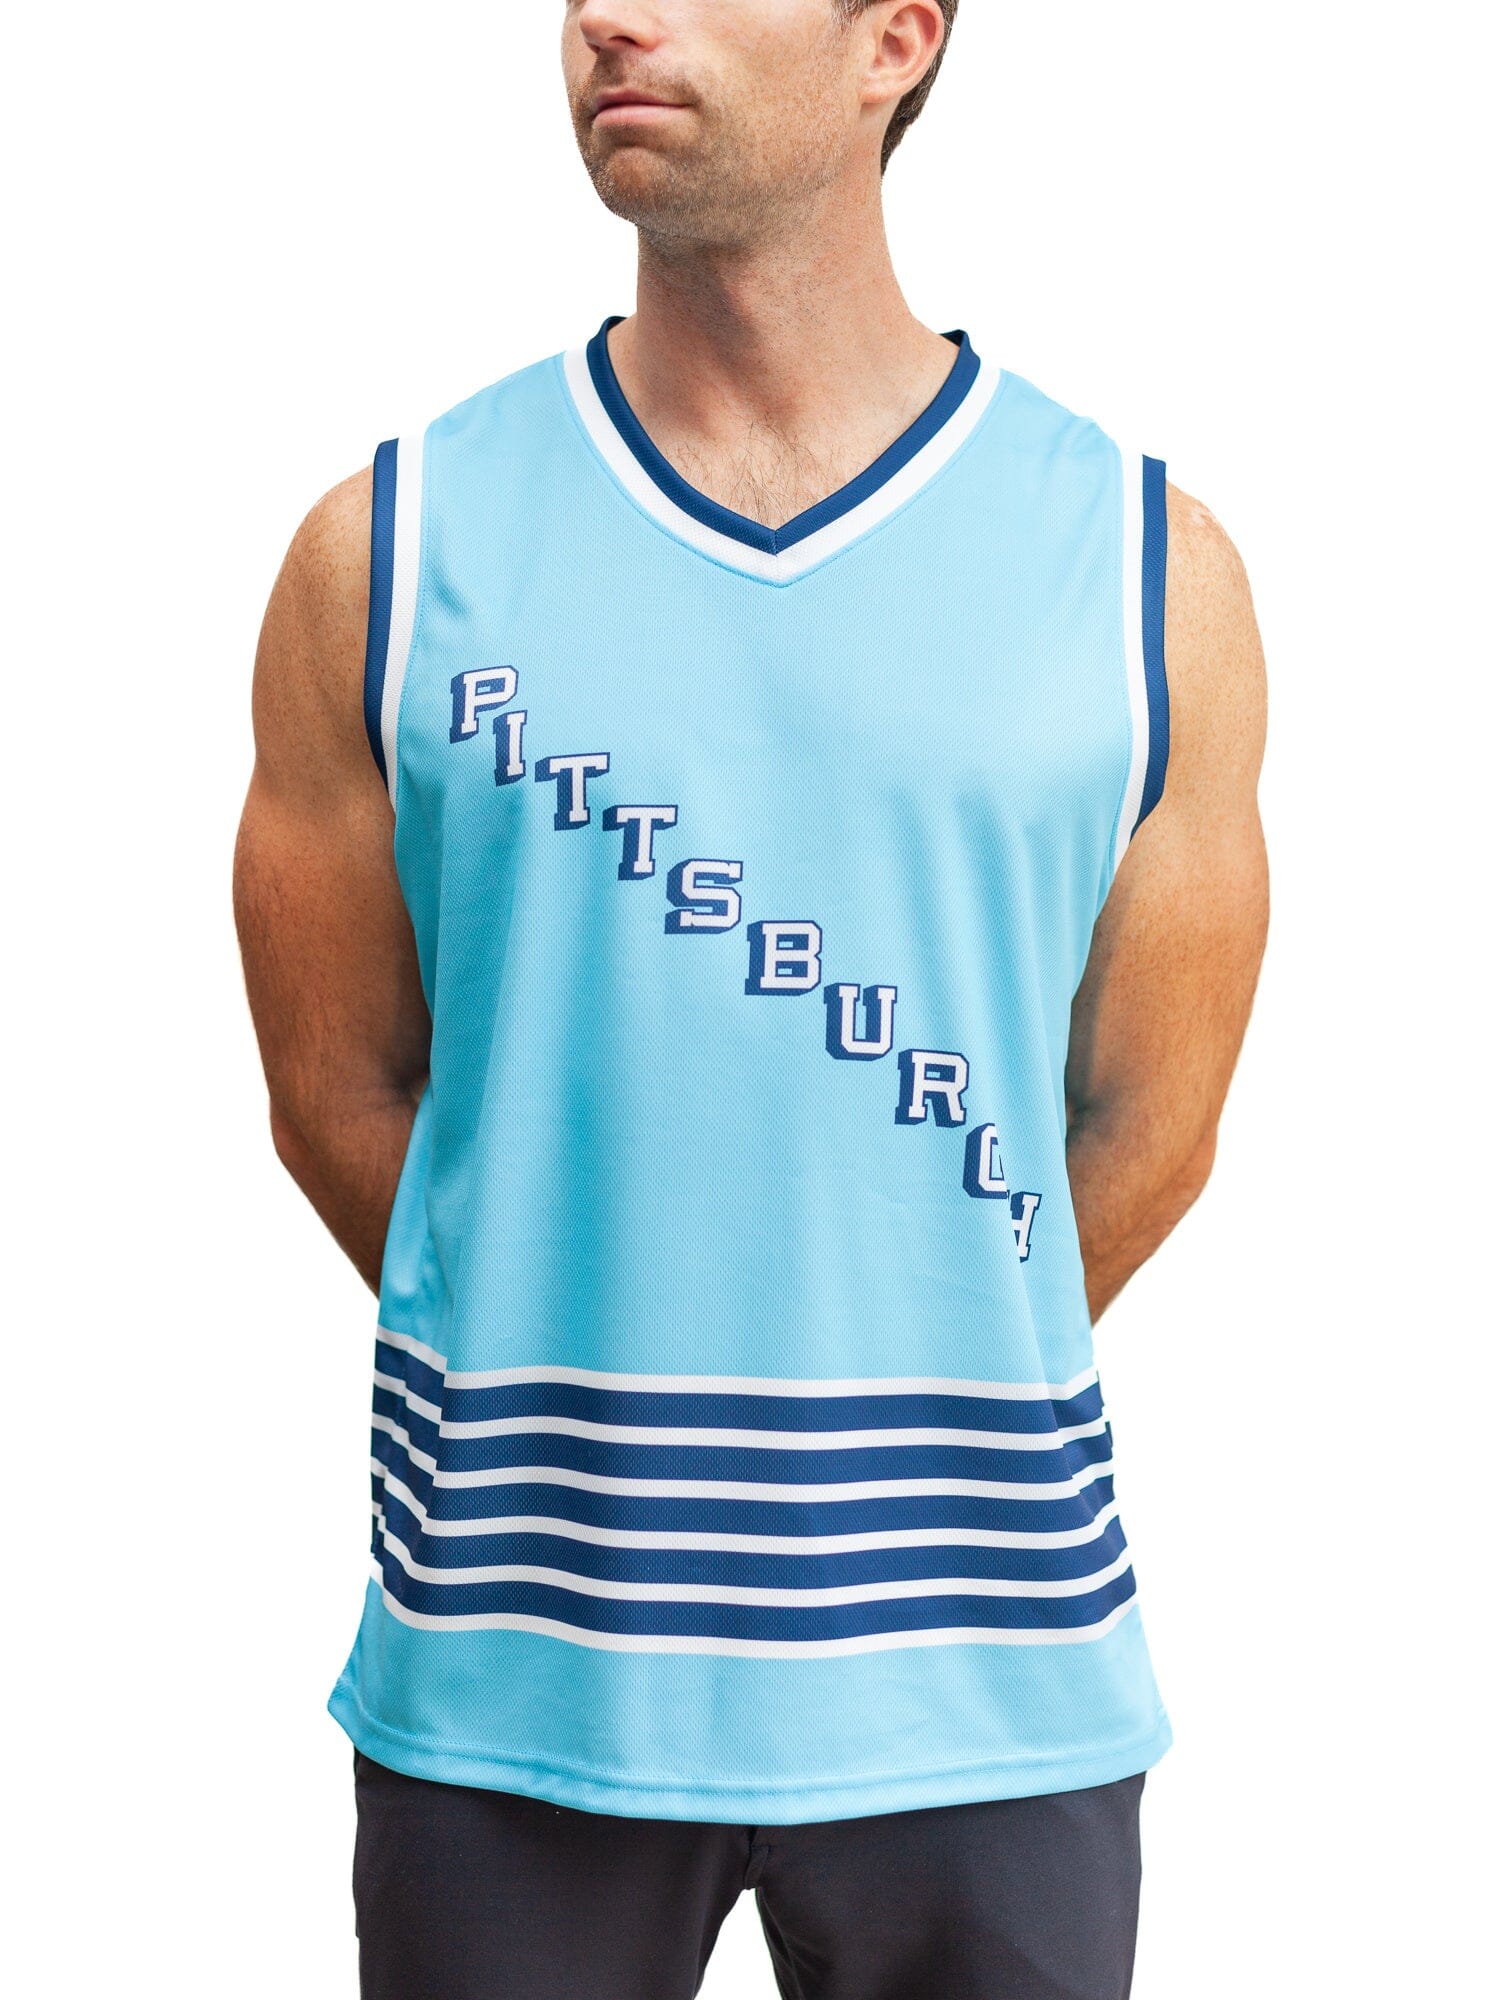 pittsburgh steelers basketball jersey